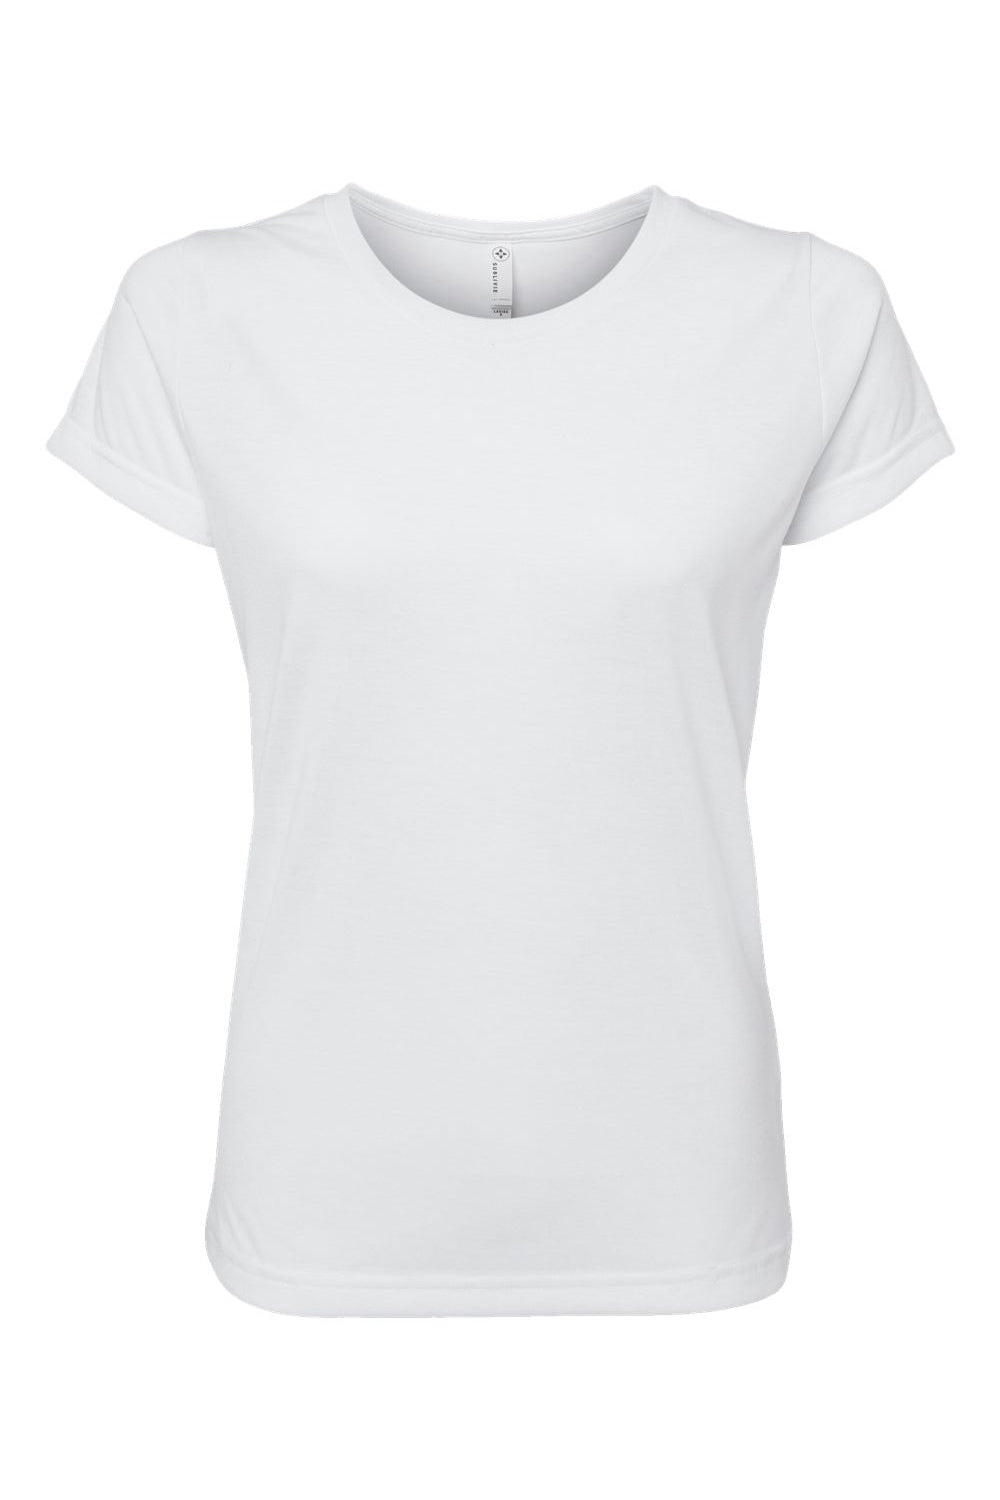 Sublivie 1510 Womens Polyester Sublimation Short Sleeve Crewneck T-Shirt White Flat Front